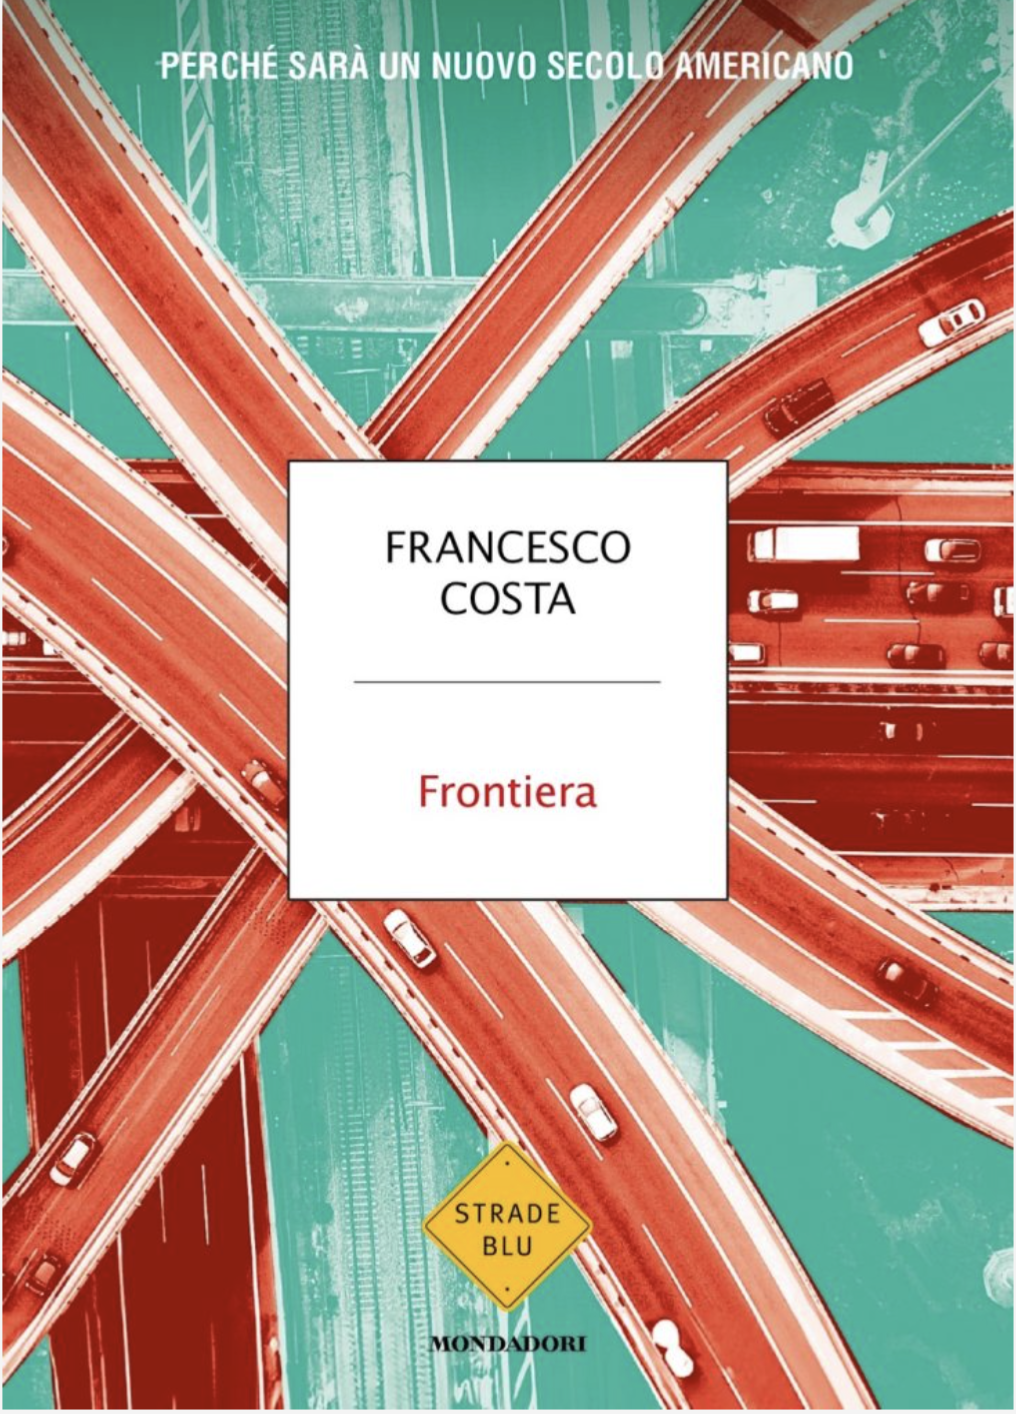 Frontiera (Italiano language, Mondadori)